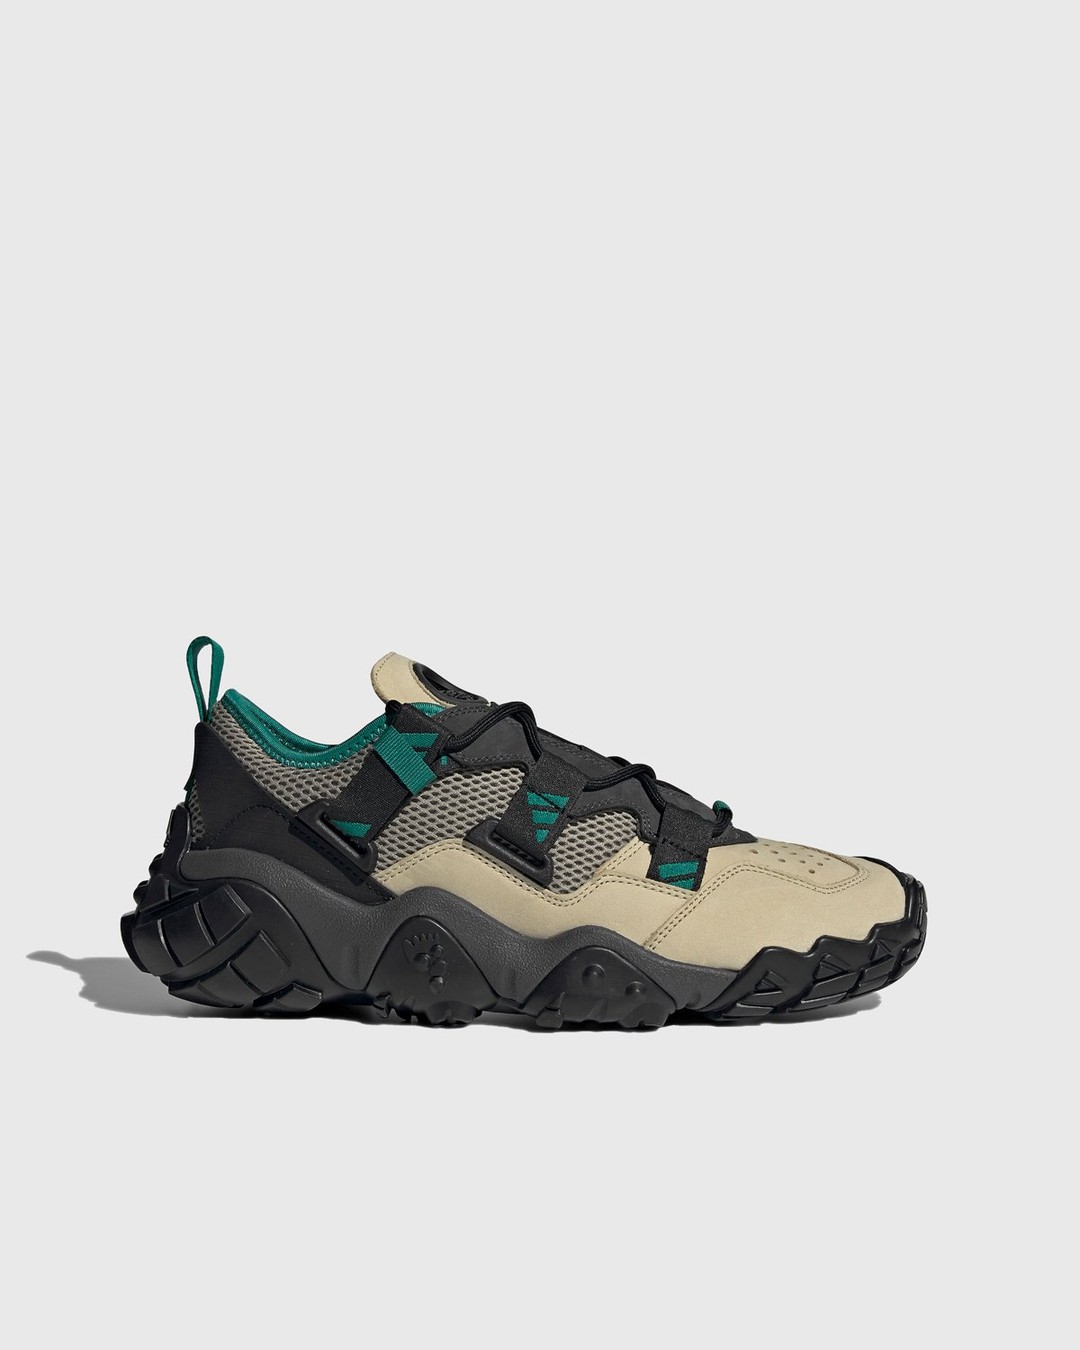 Adidas – FYW XTA Sand/Black/Green - Low Top Sneakers - Multi - Image 1